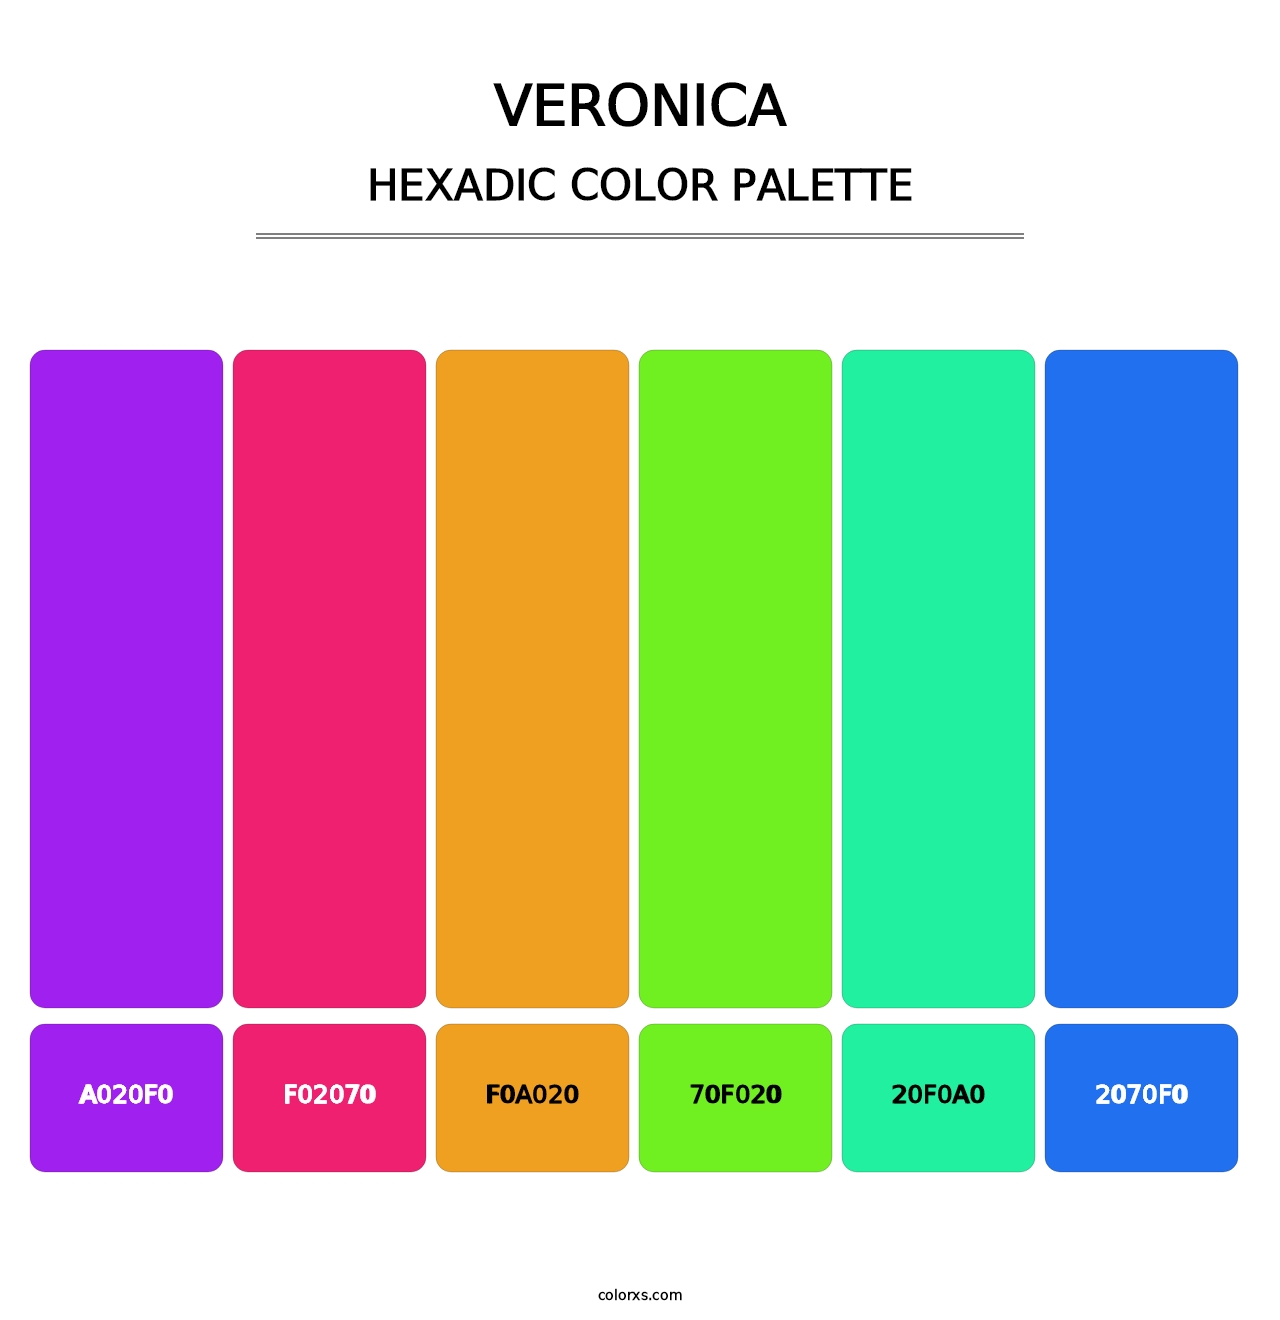 Veronica - Hexadic Color Palette